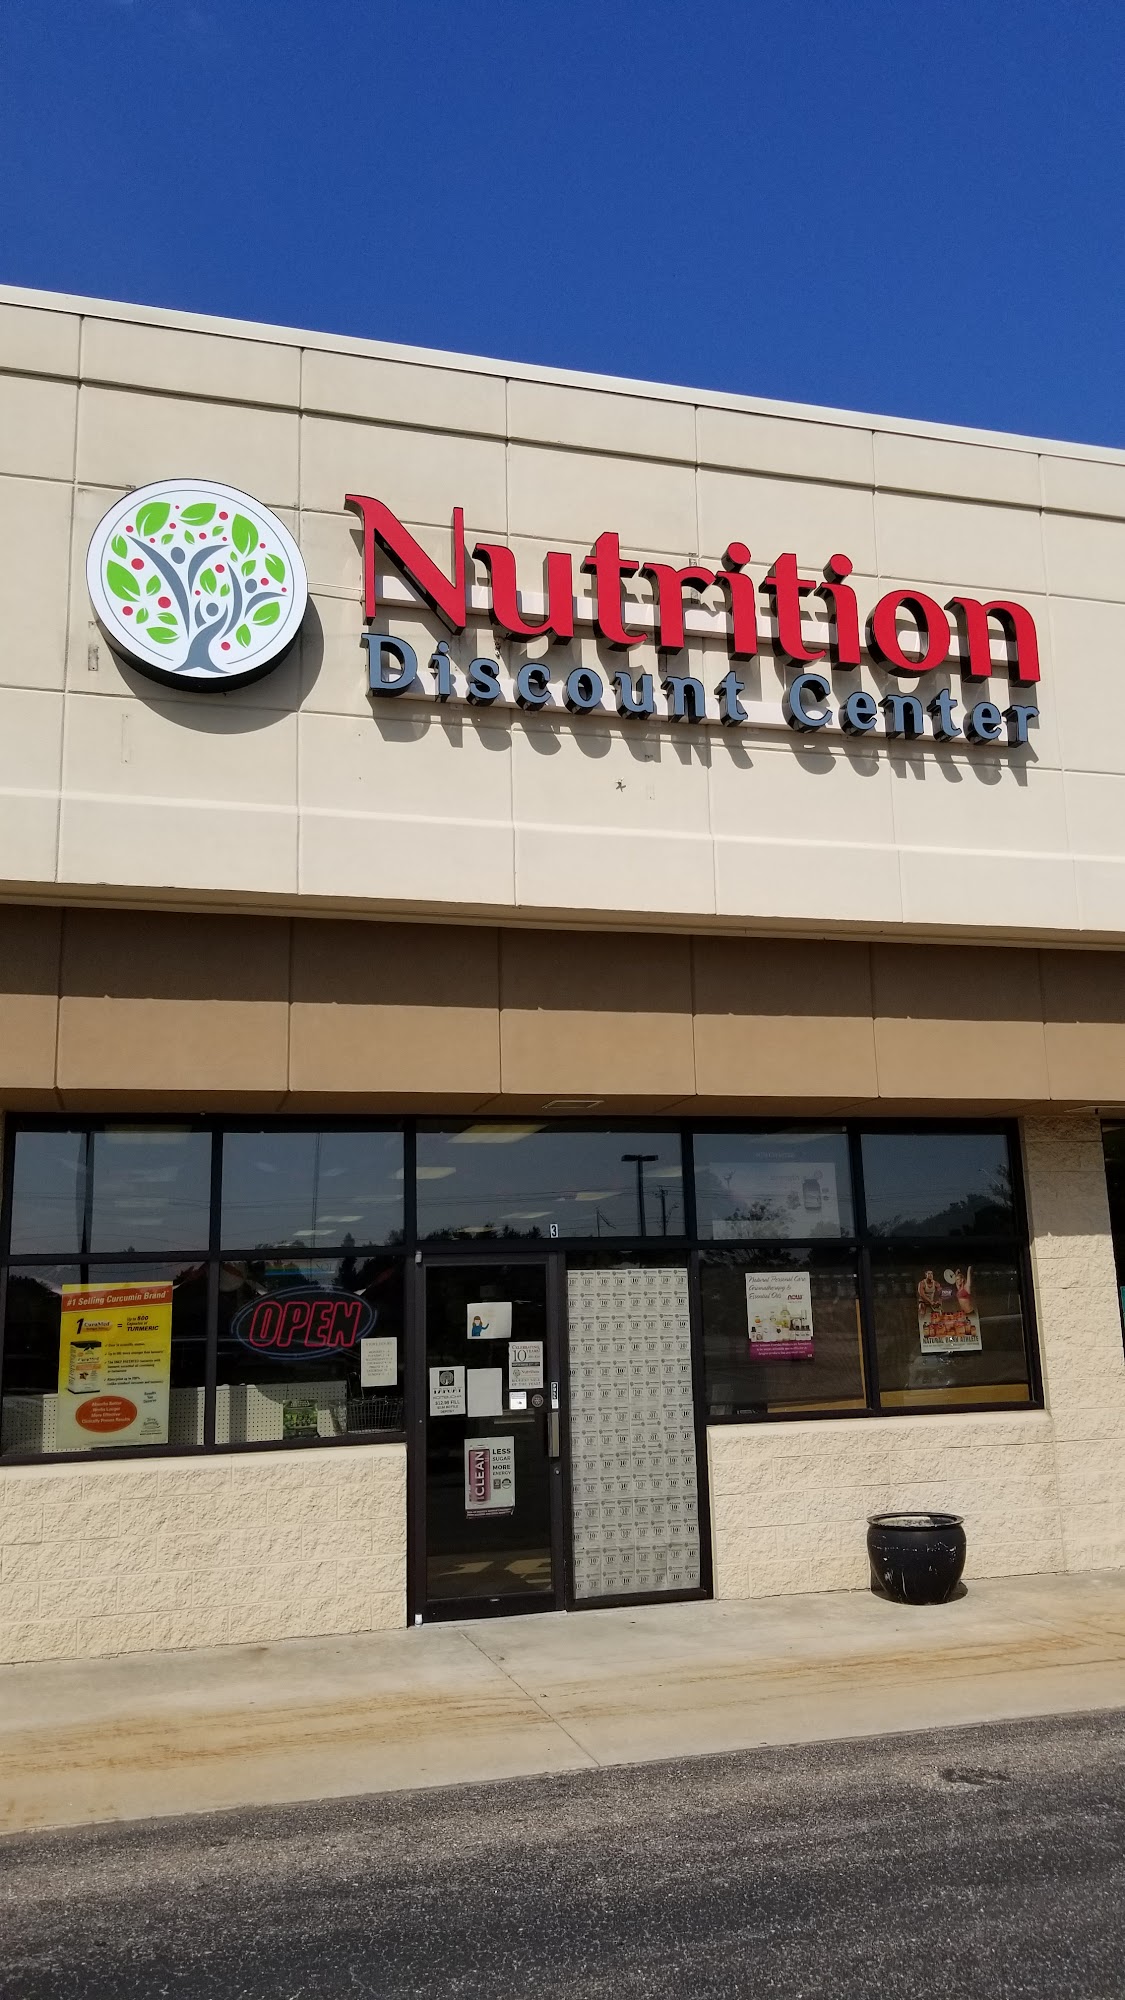 Nutrition Discount Center